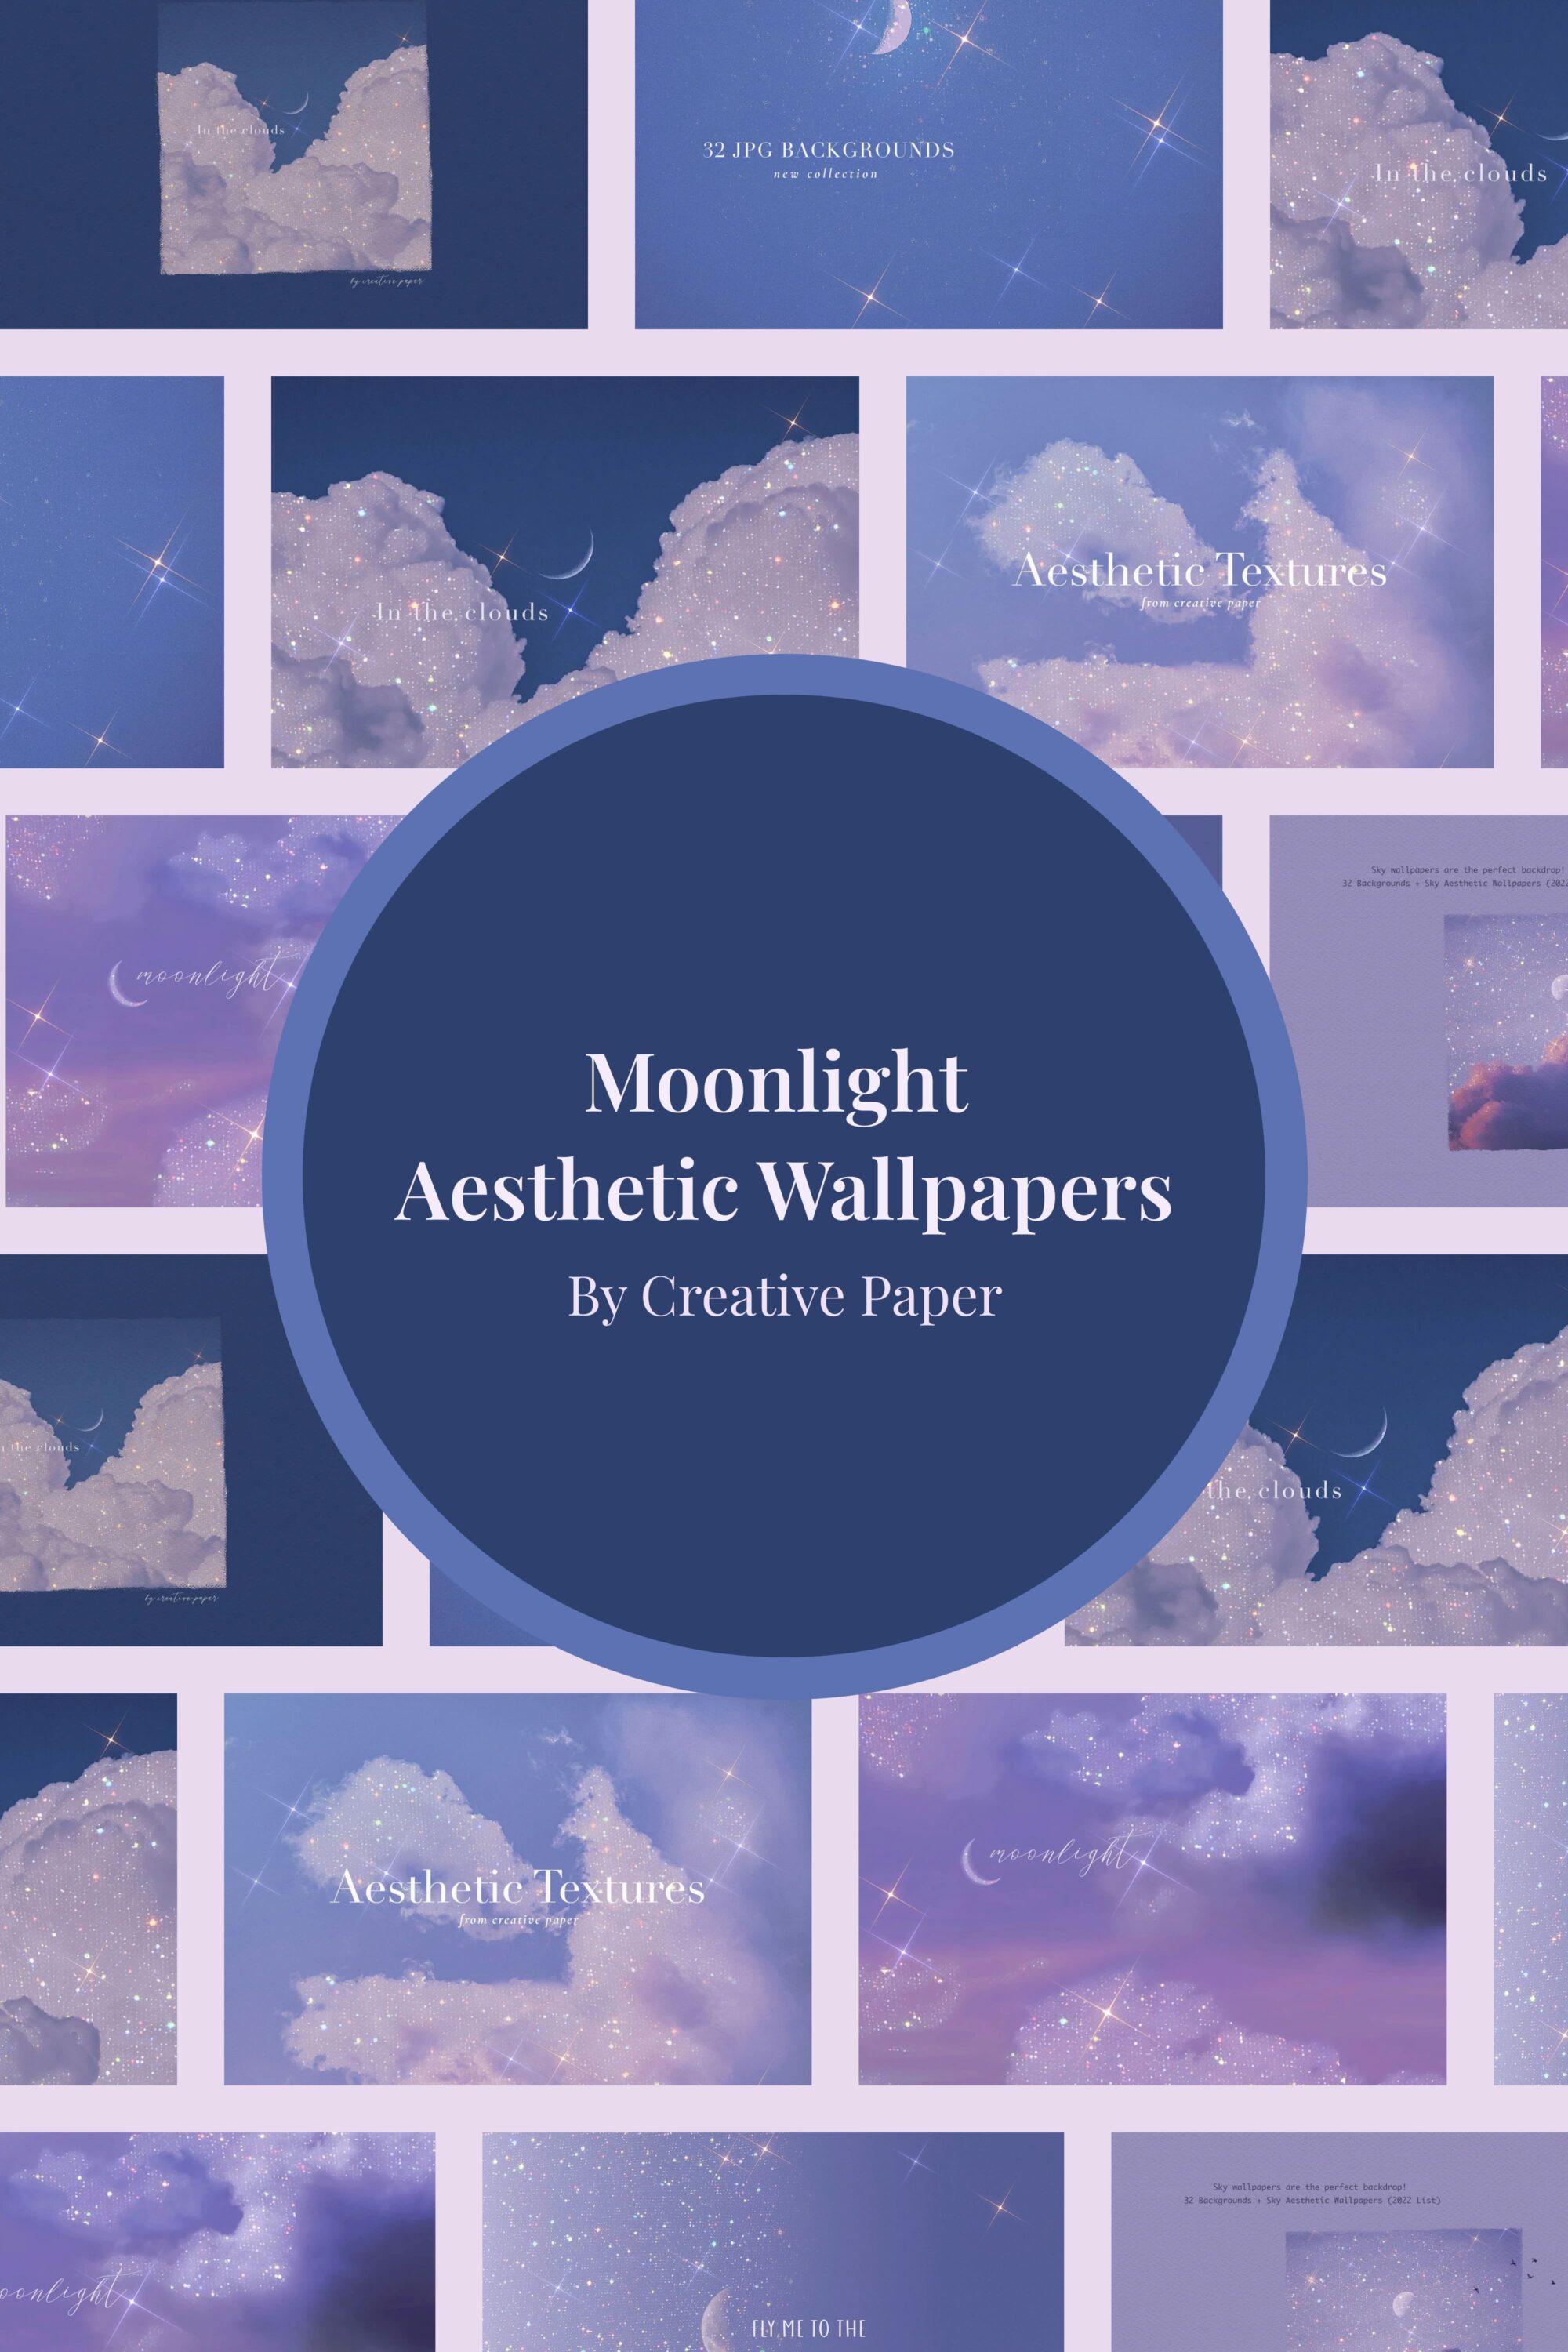 Moonlight Aesthetic Wallpapers pinterest image.